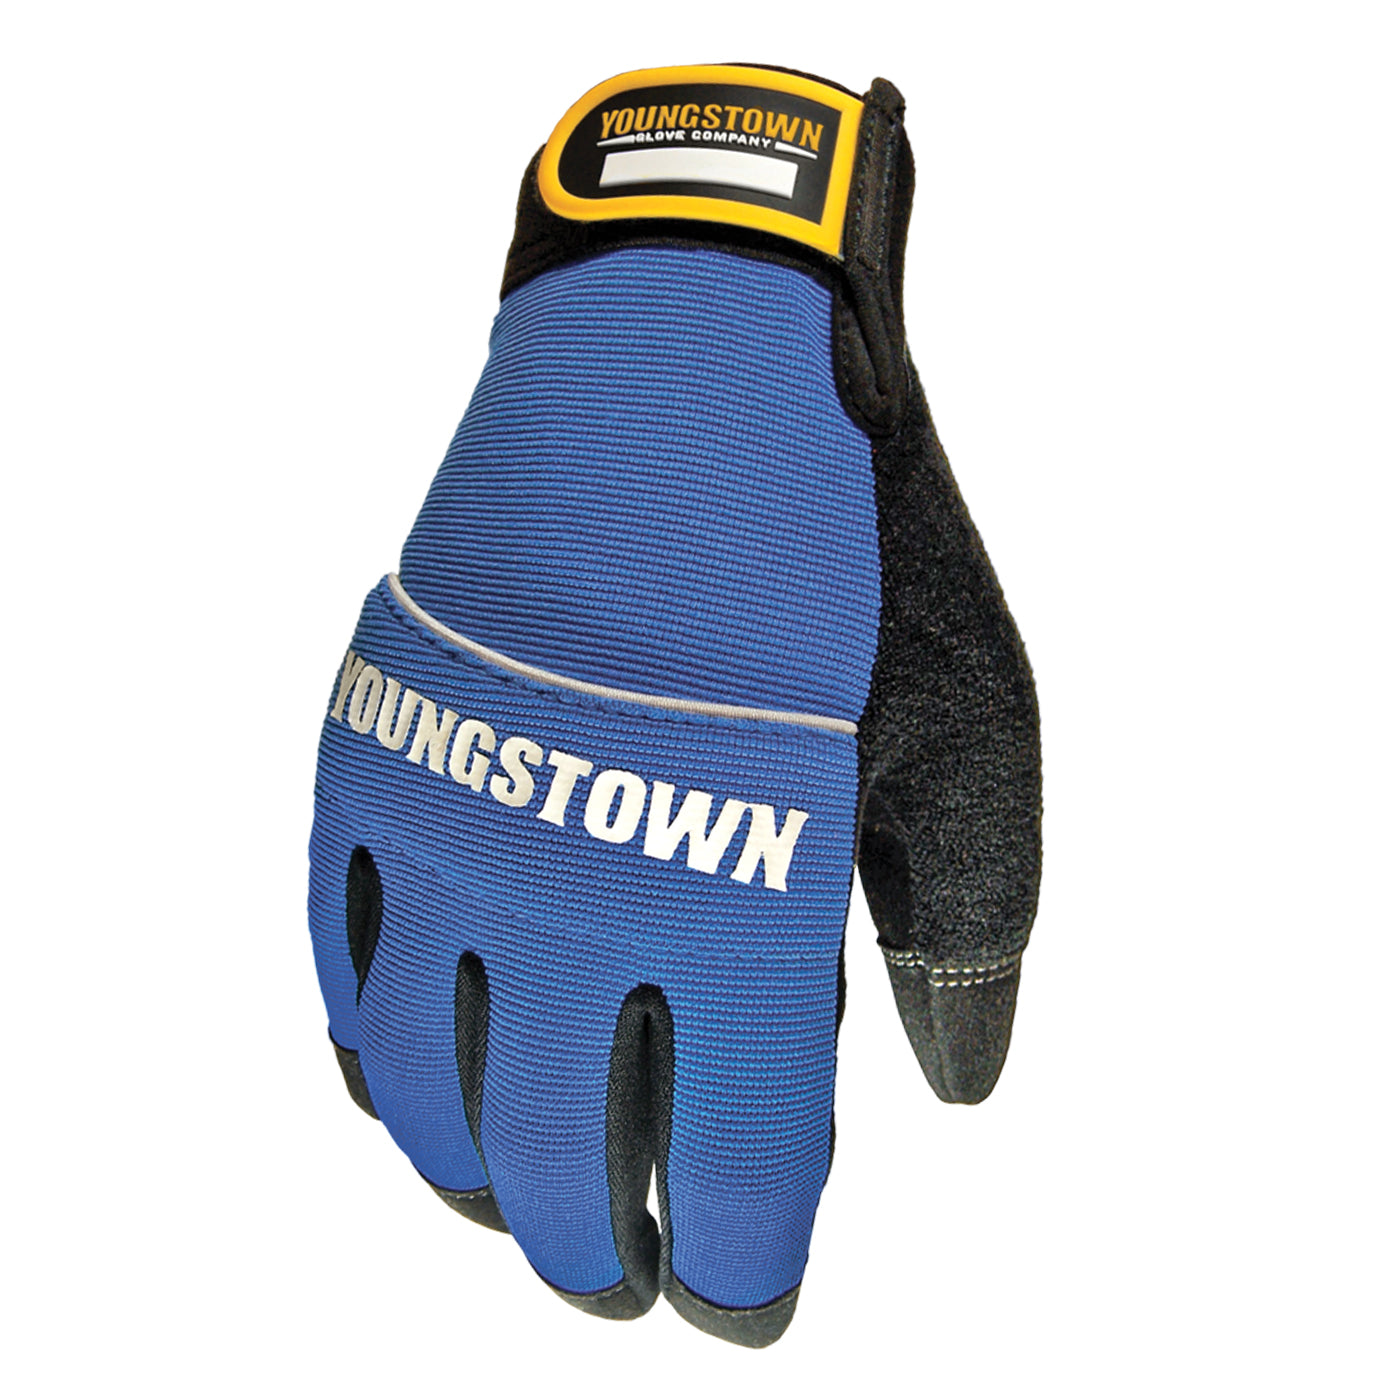 06-3020-60 Youngstown Mechanics Plus Glove - Main image